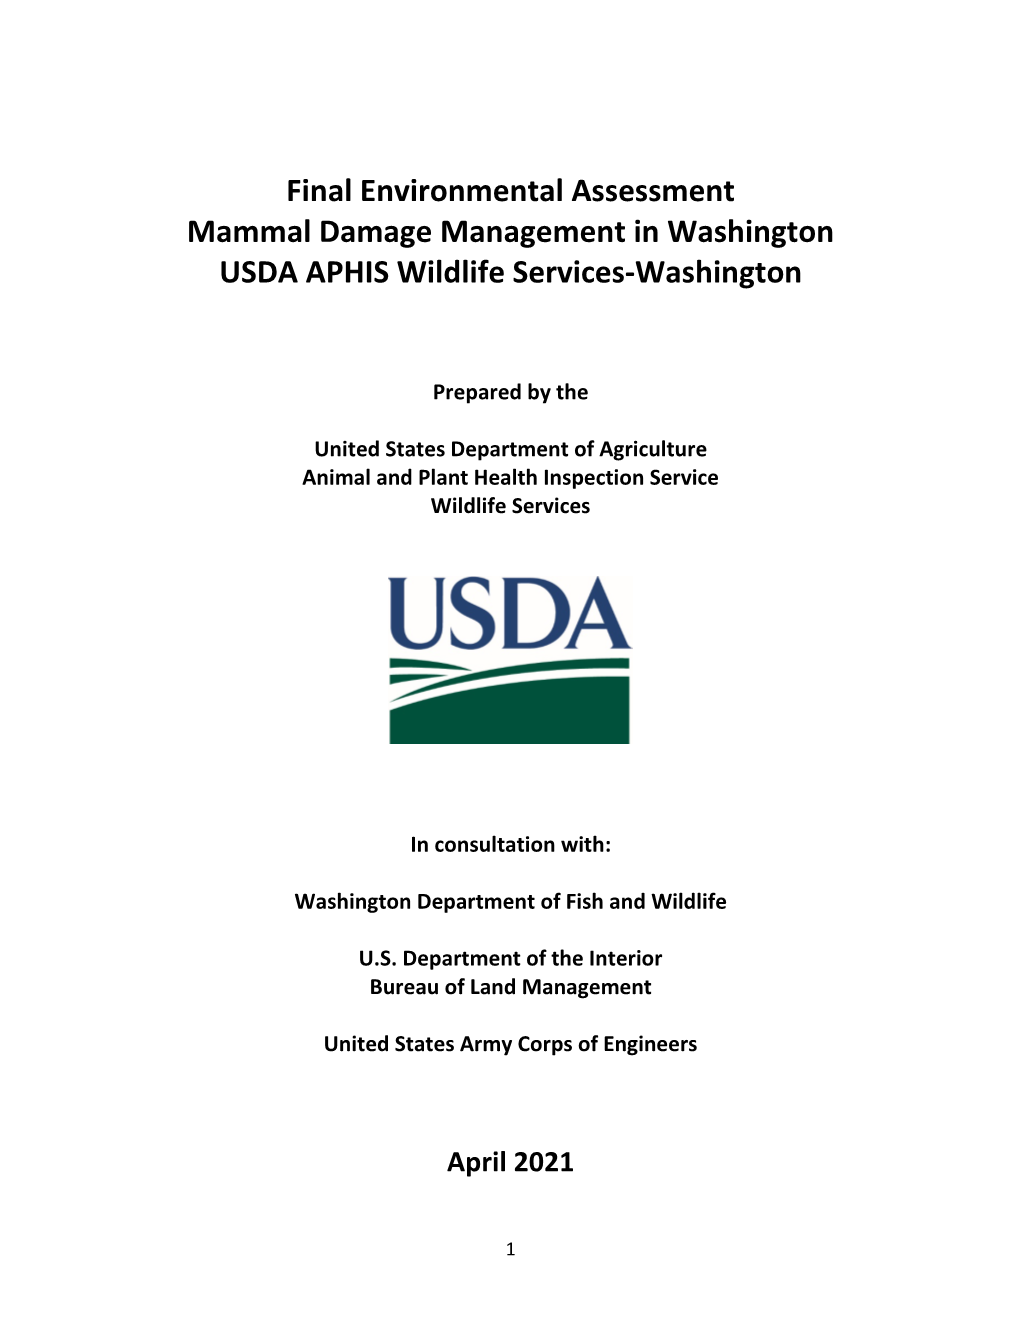 2021 Washington Mammal Damage Management Final EA